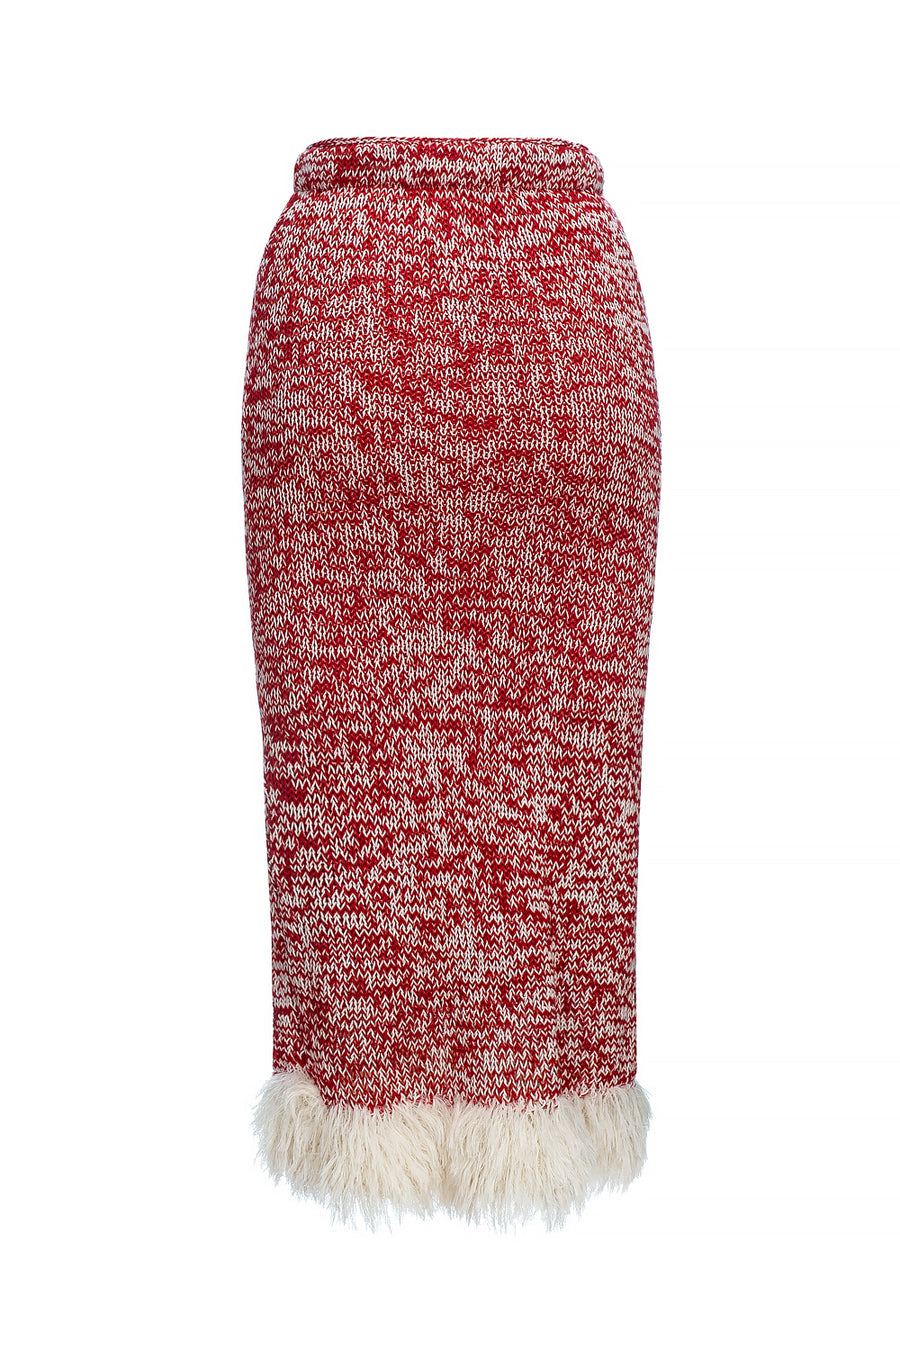 red handmade knit skirt by andreeva